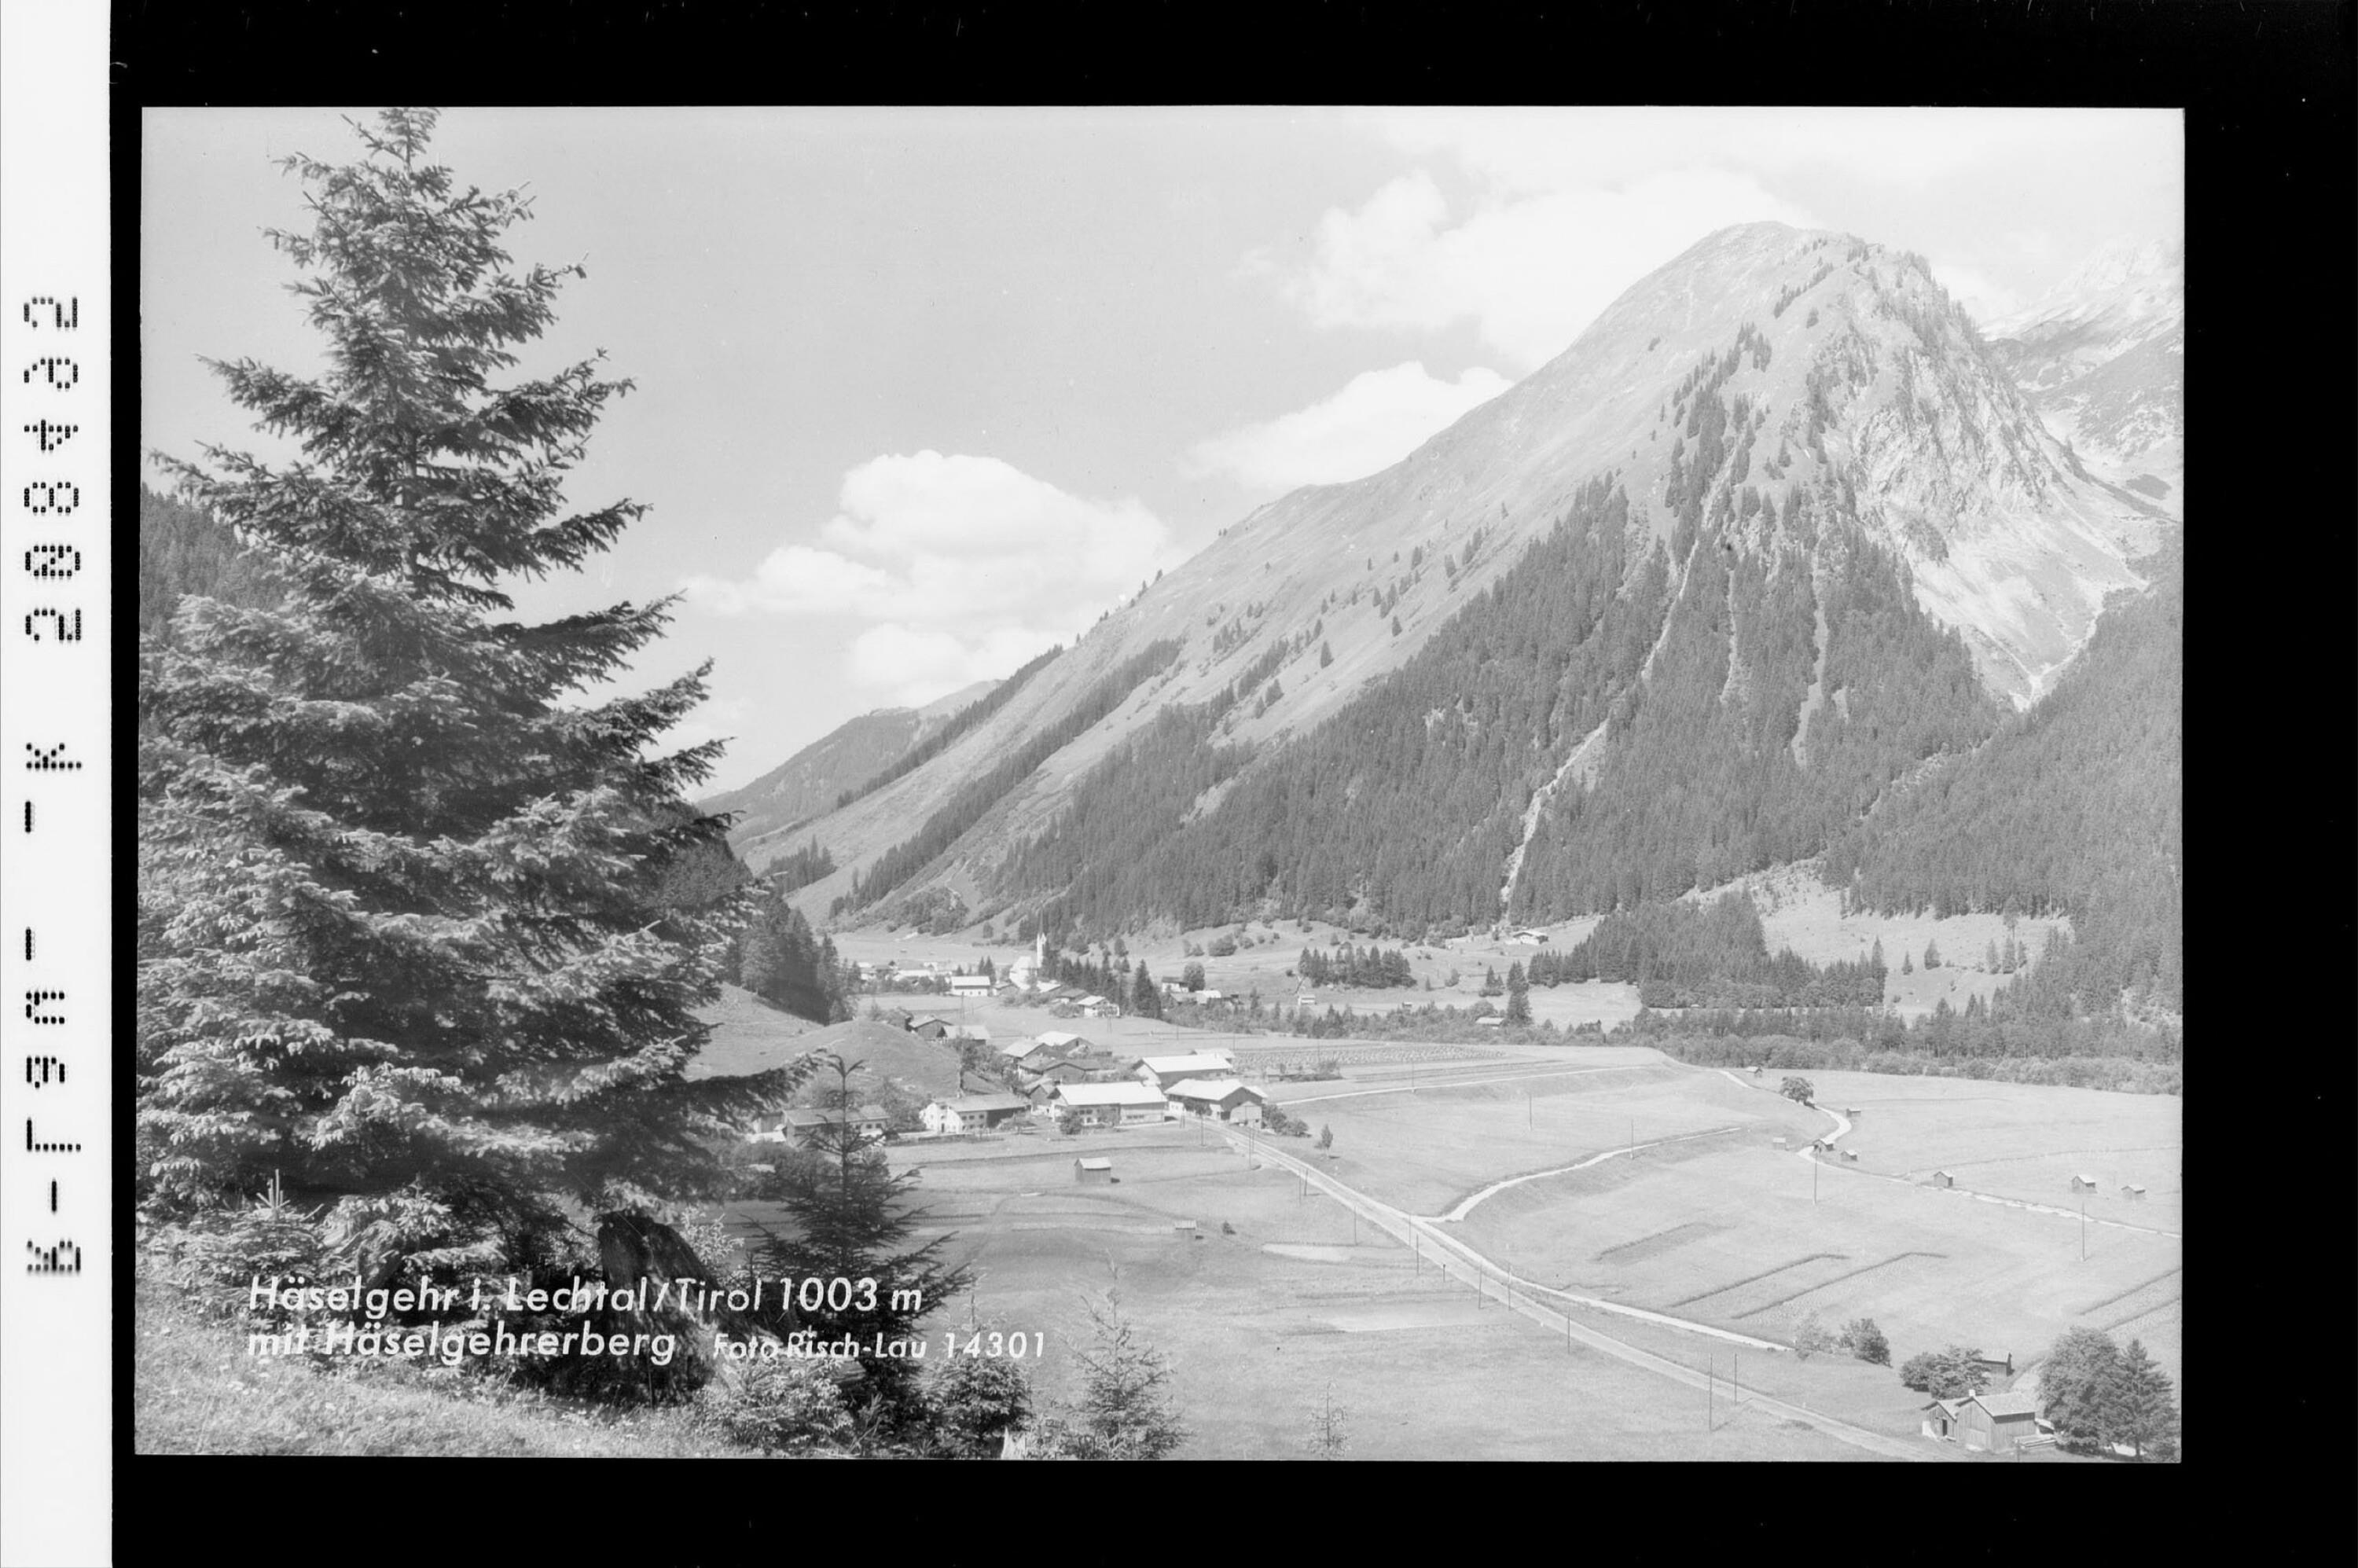 Häselgehr im Lechtal, Tirol 1003 m mit Häselgehrerberg></div>


    <hr>
    <div class=